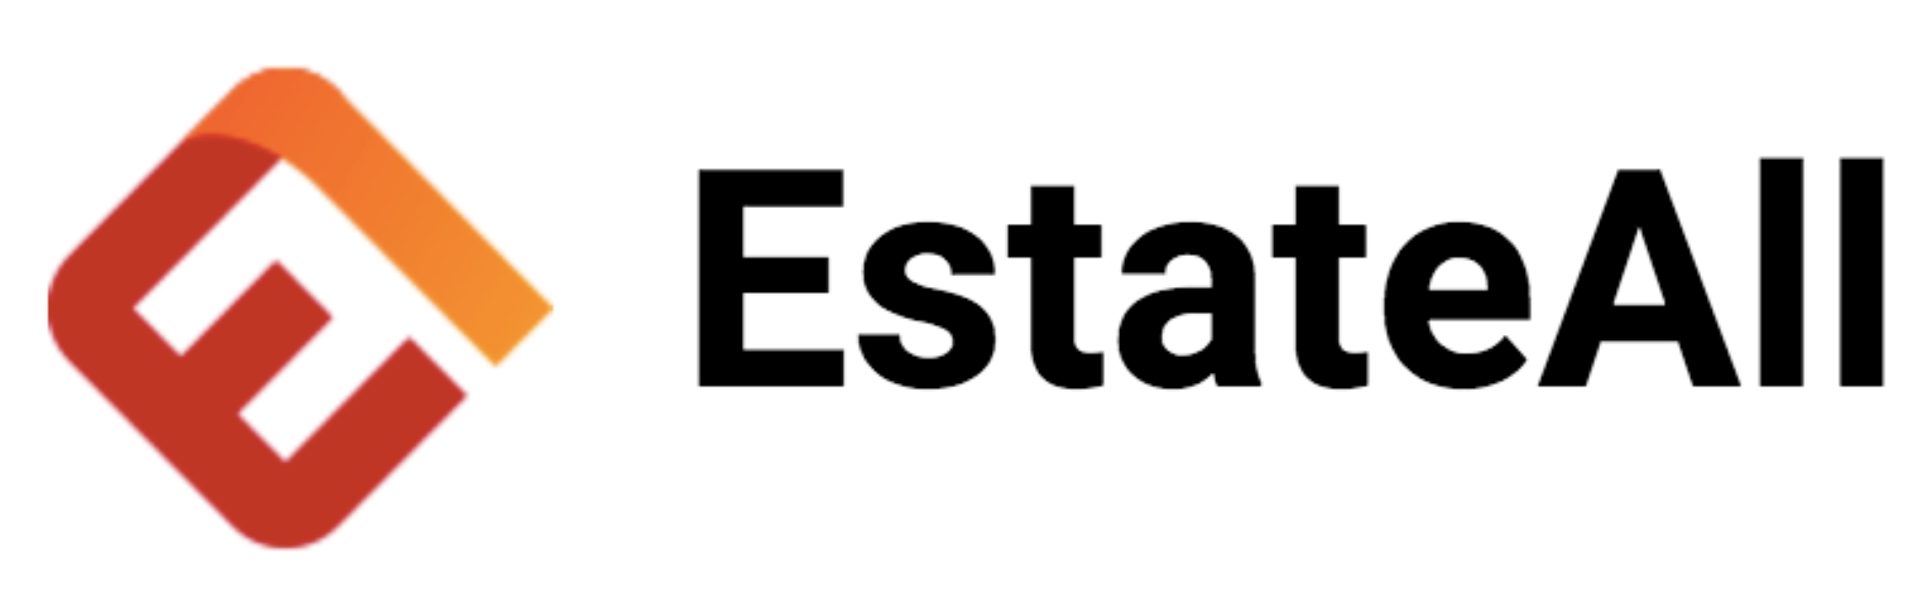 Estateall company